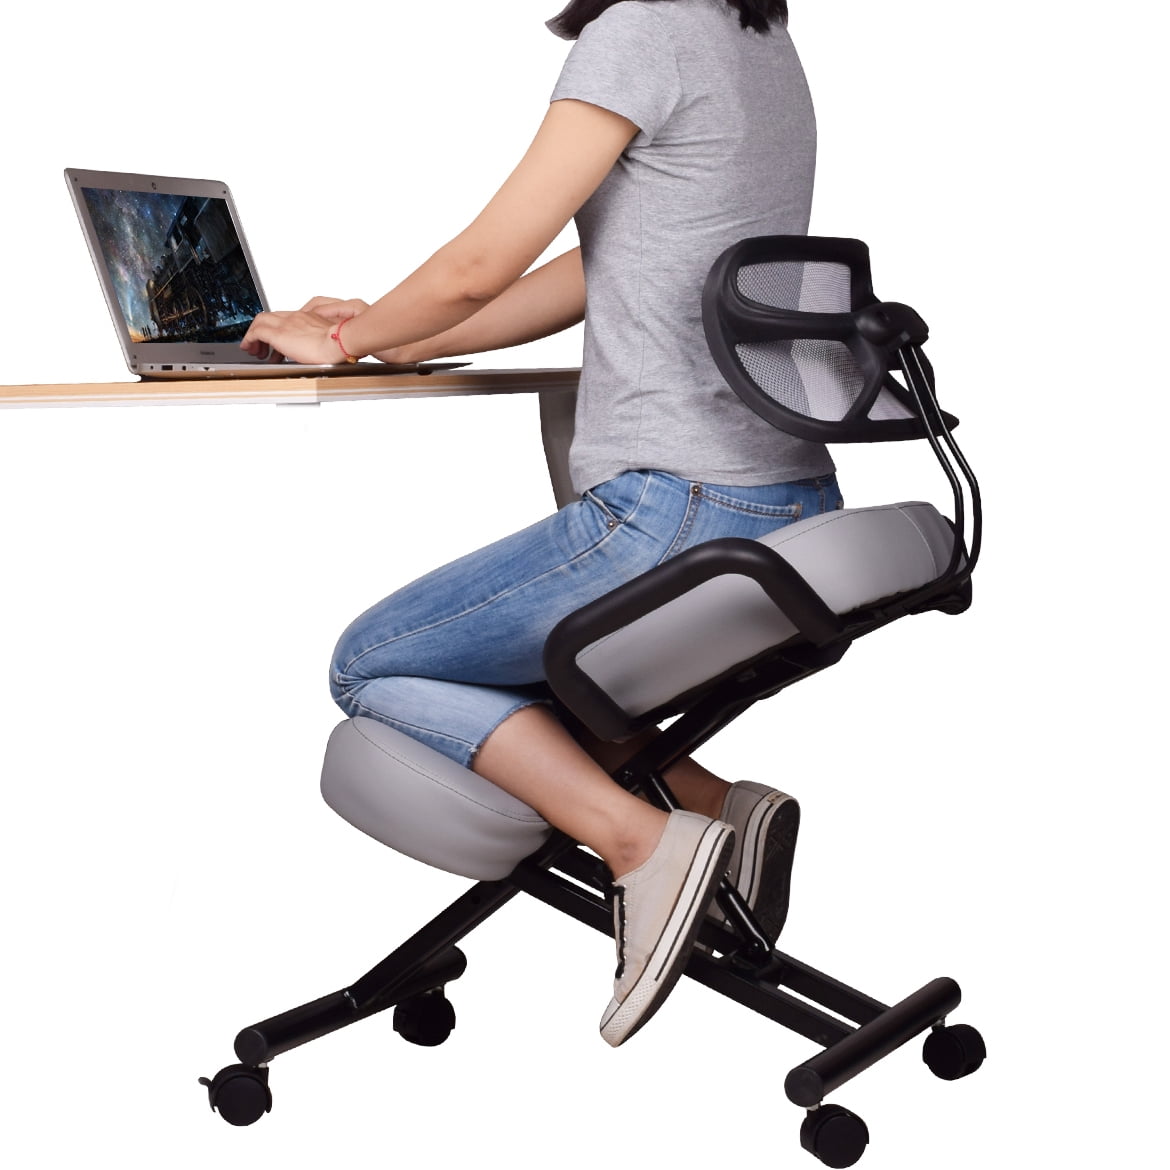 DRAGONN (By VIVO) Ergonomic Kneeling Chair with Back Support, Gray - Walmart.com